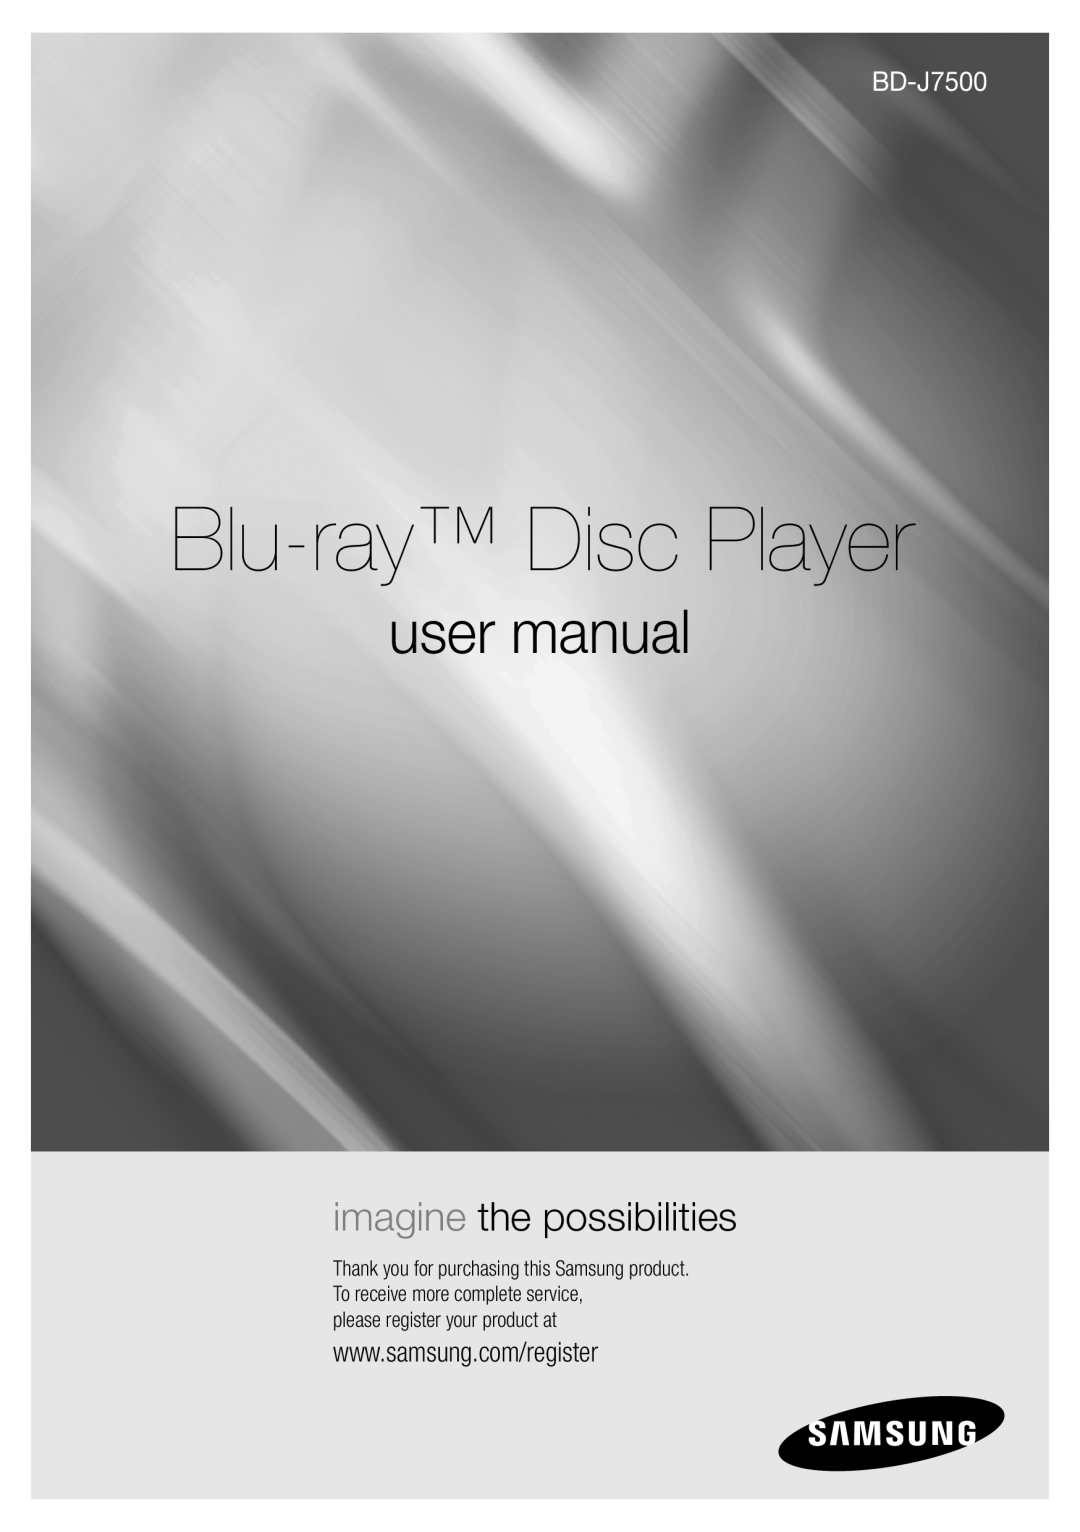 Samsung BD-J7500/ZF, BD-J7500/EN manual Blu-ray Disc Player, user manual, imagine the possibilities 